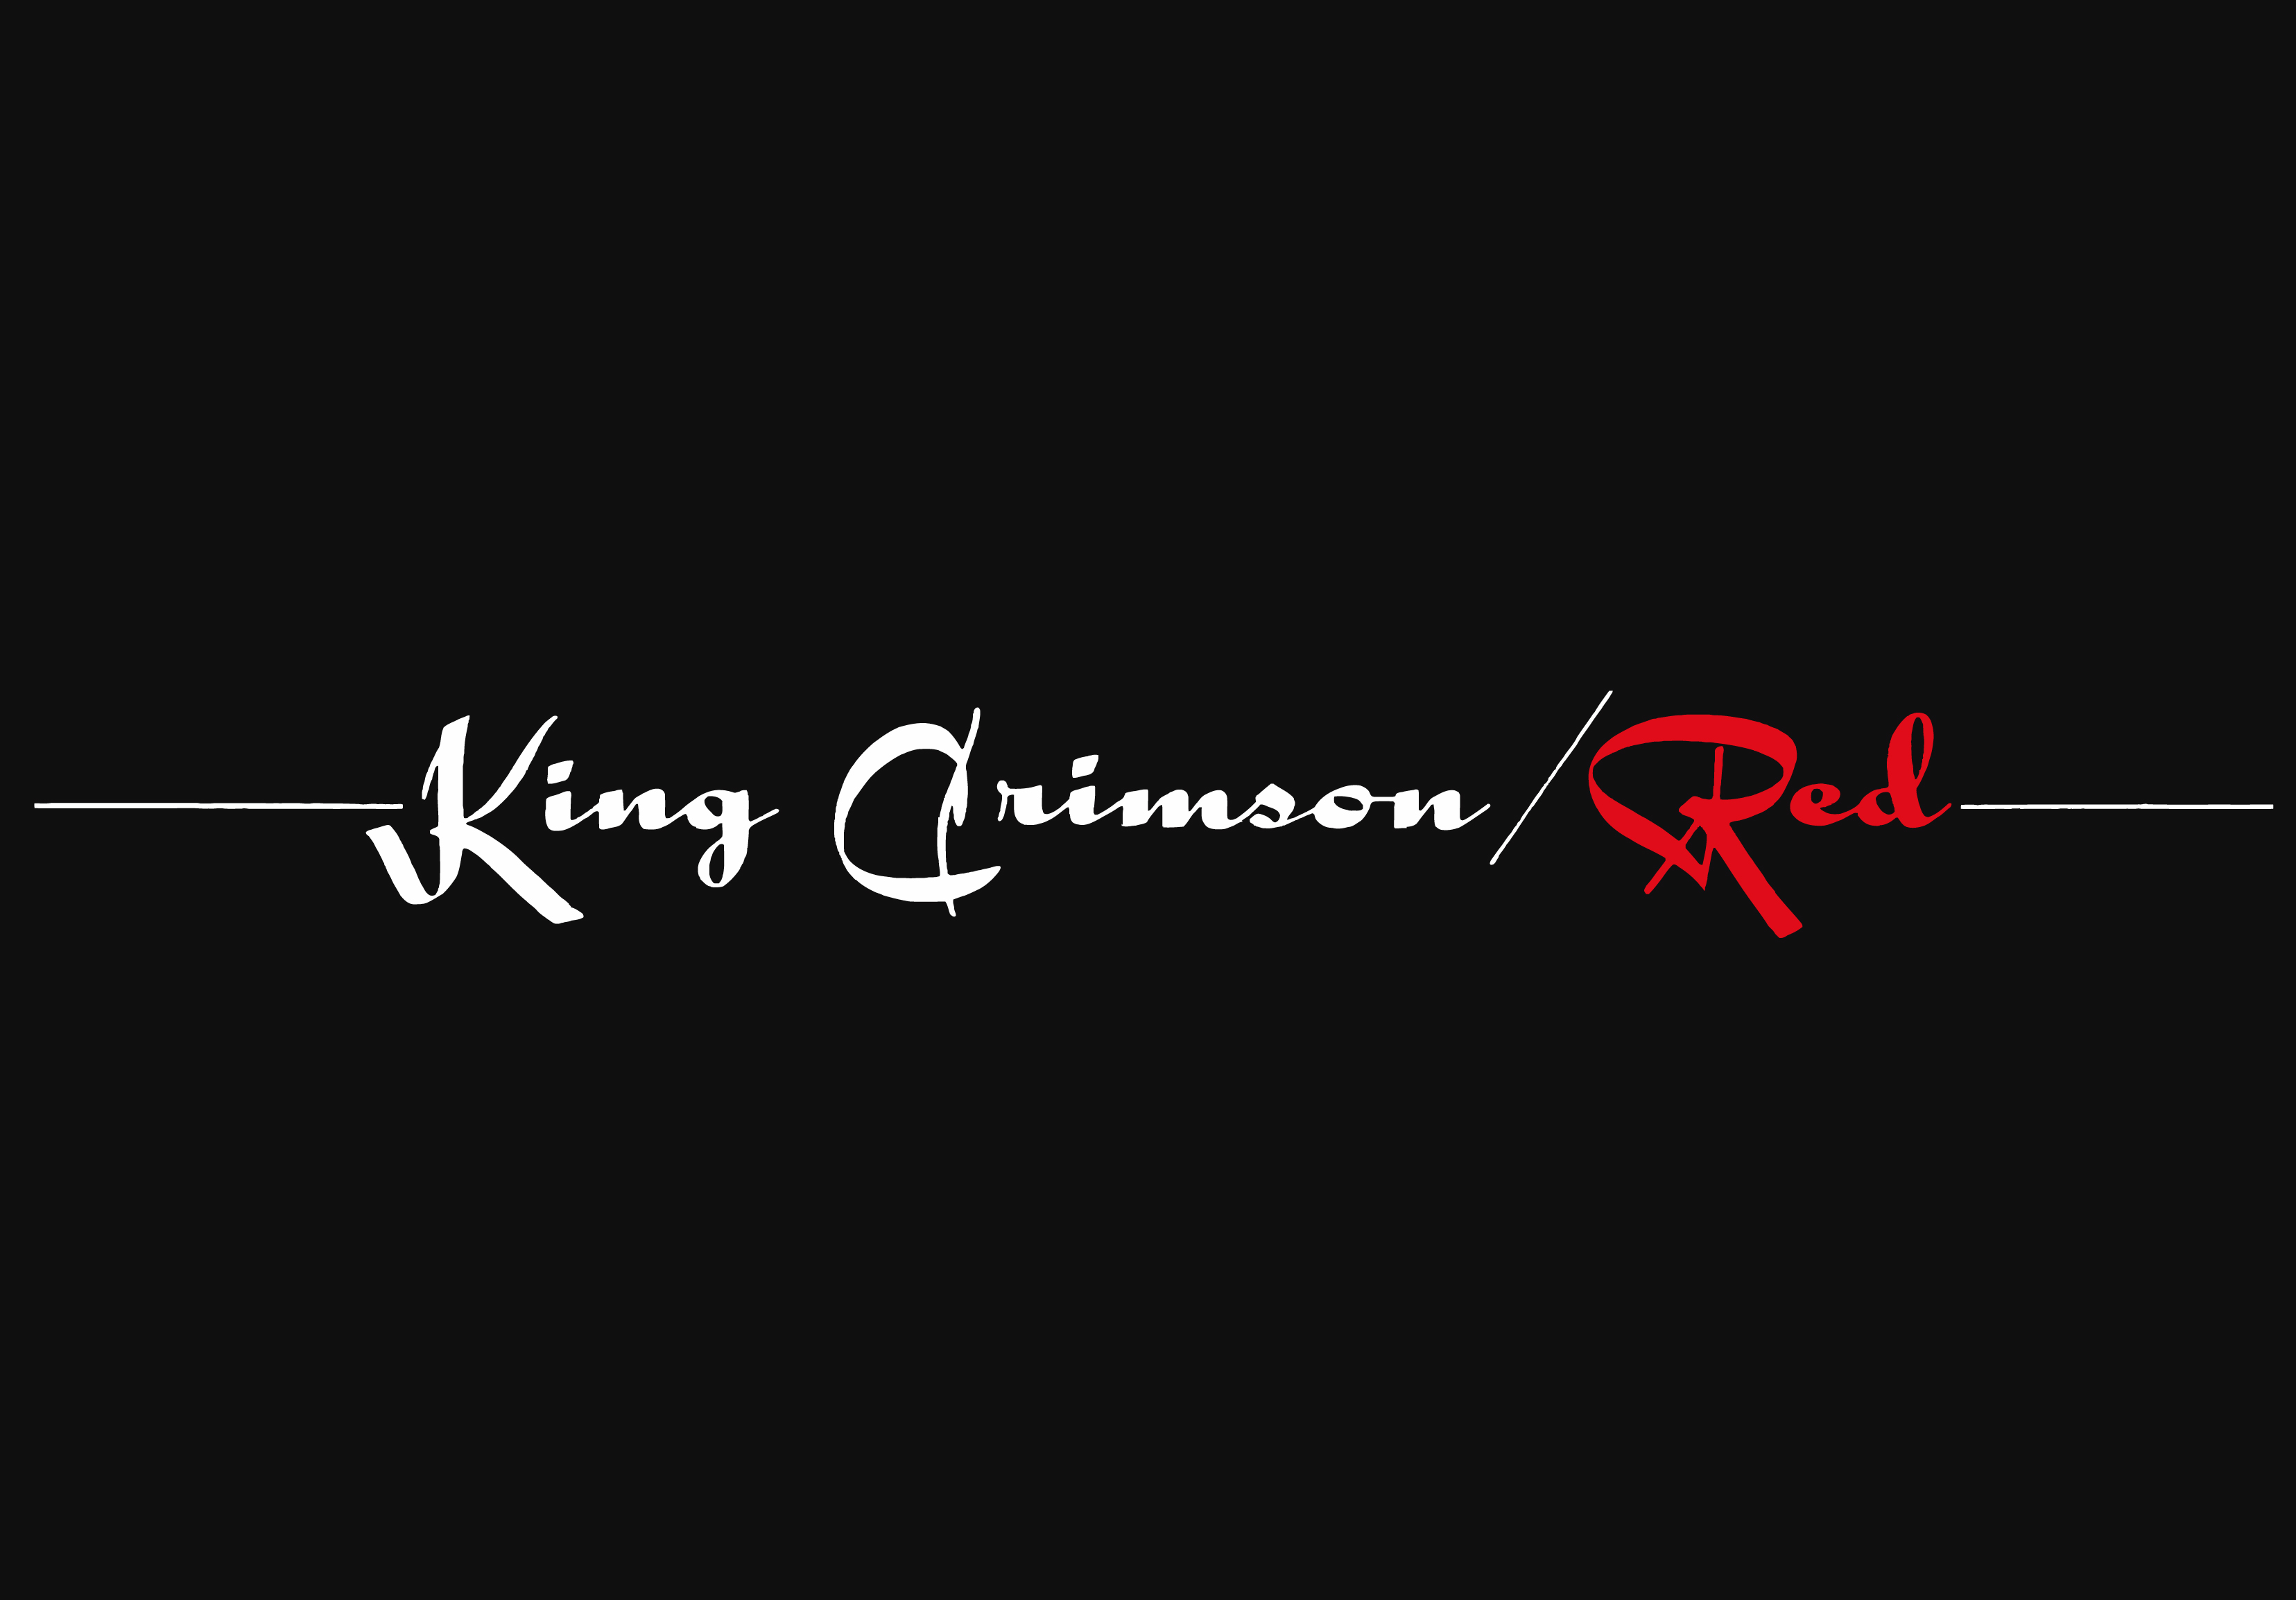 King Crimson Red By Ghigo1972